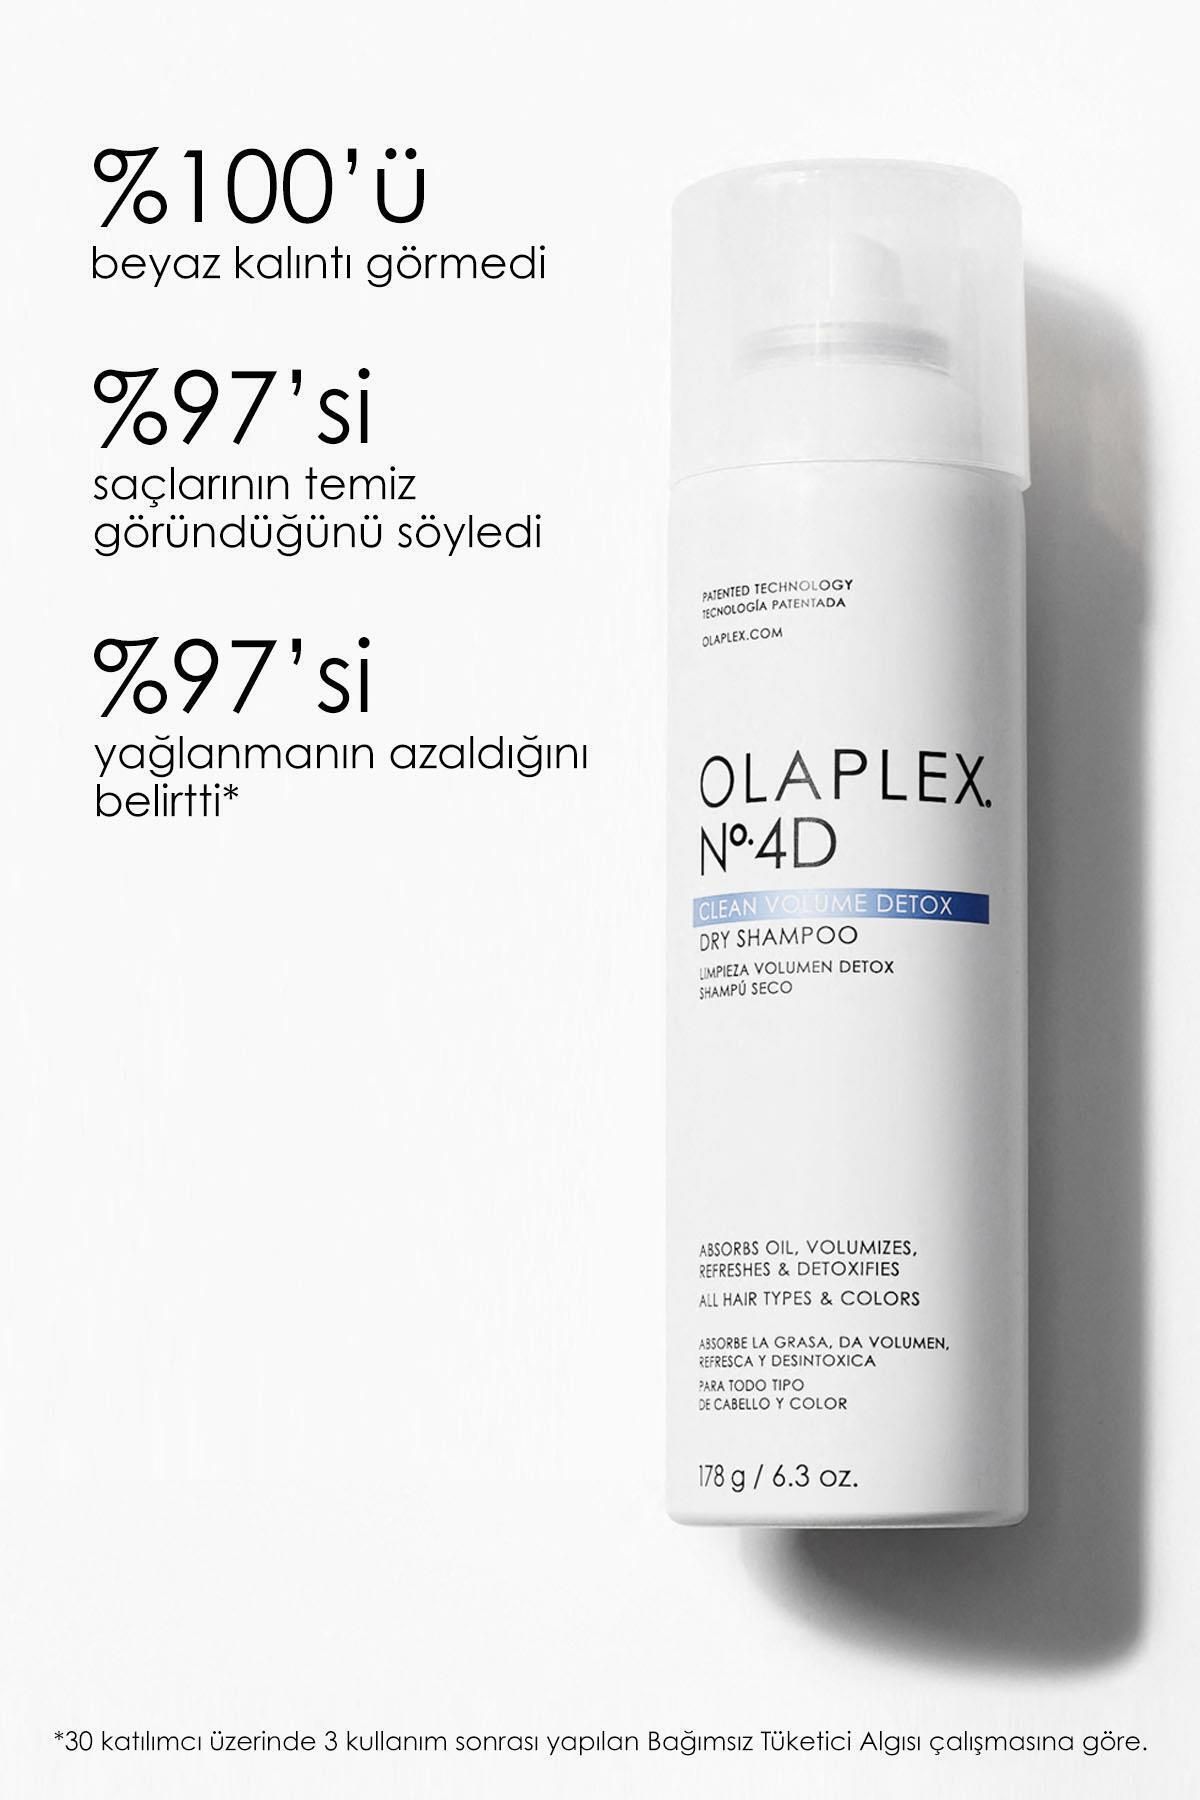 Olaplex شامپو خشک تصفیه حجم دهنده No. 4D شامپو خشک موثر تصفیه حجم دهنده 50 میلی لیتر